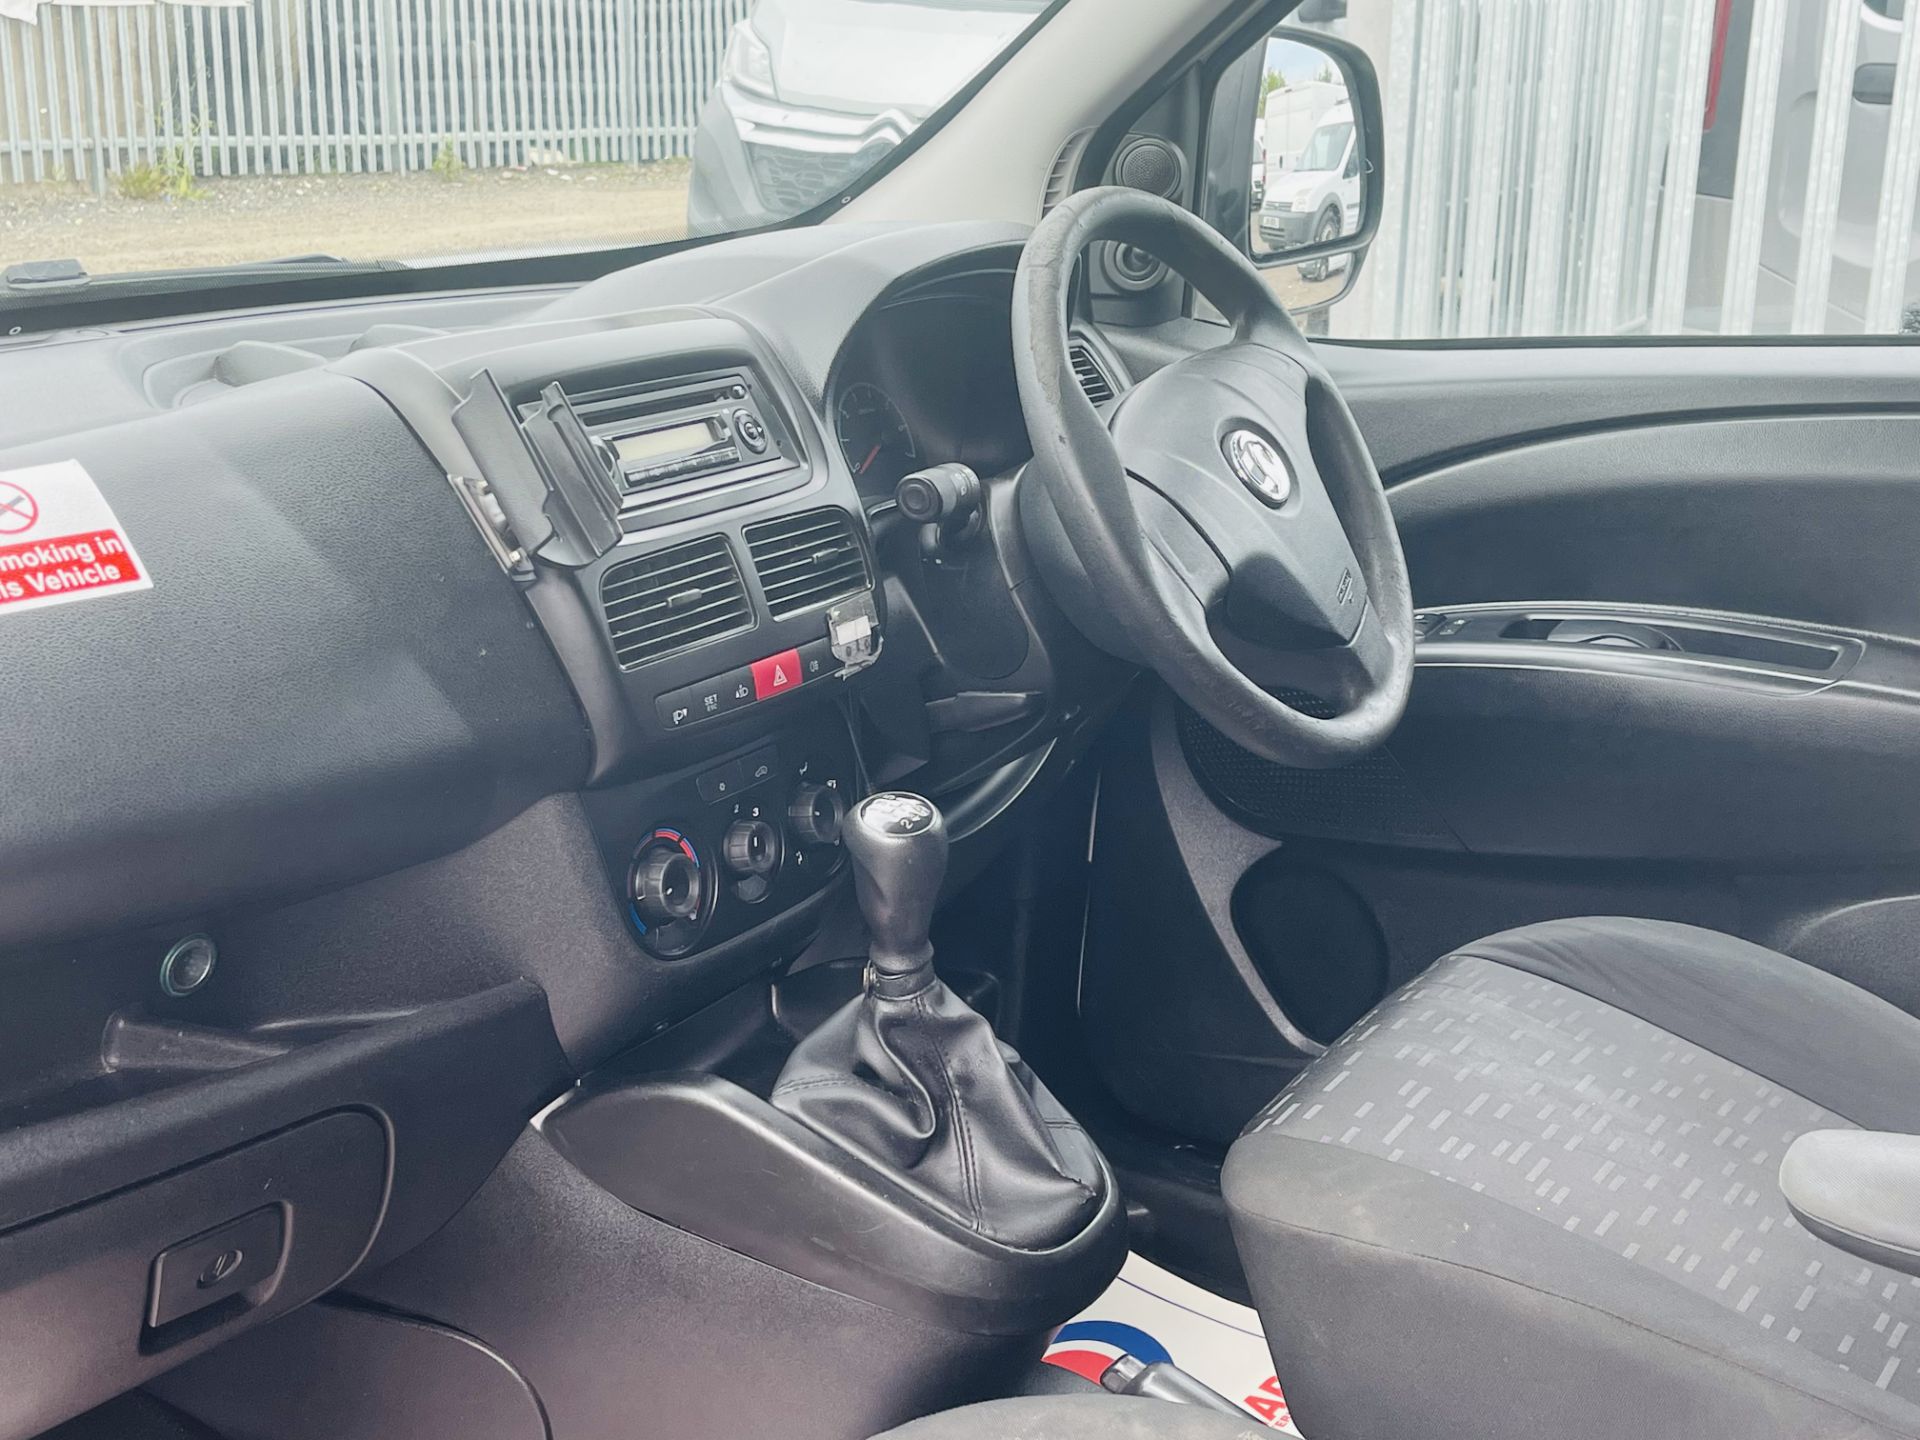 Vauxhall Combo 2000 1.3 CDTI L1 H1 2012 '12 Reg' - Panel Van - Image 6 of 16